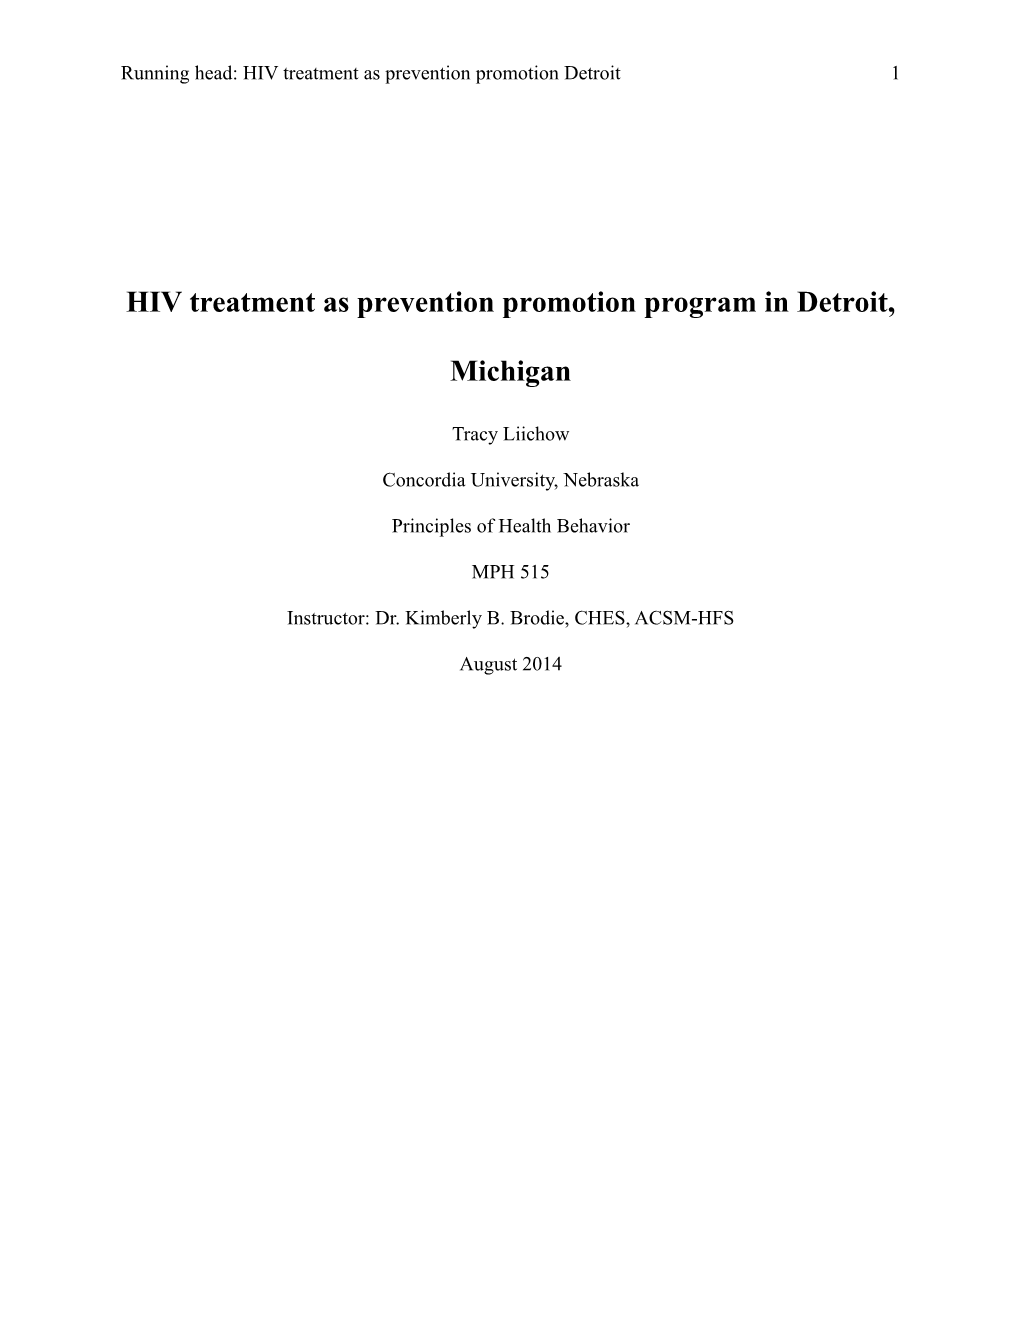 HIV Treatment As Prevention Promotion Program In Detroit, Michigan